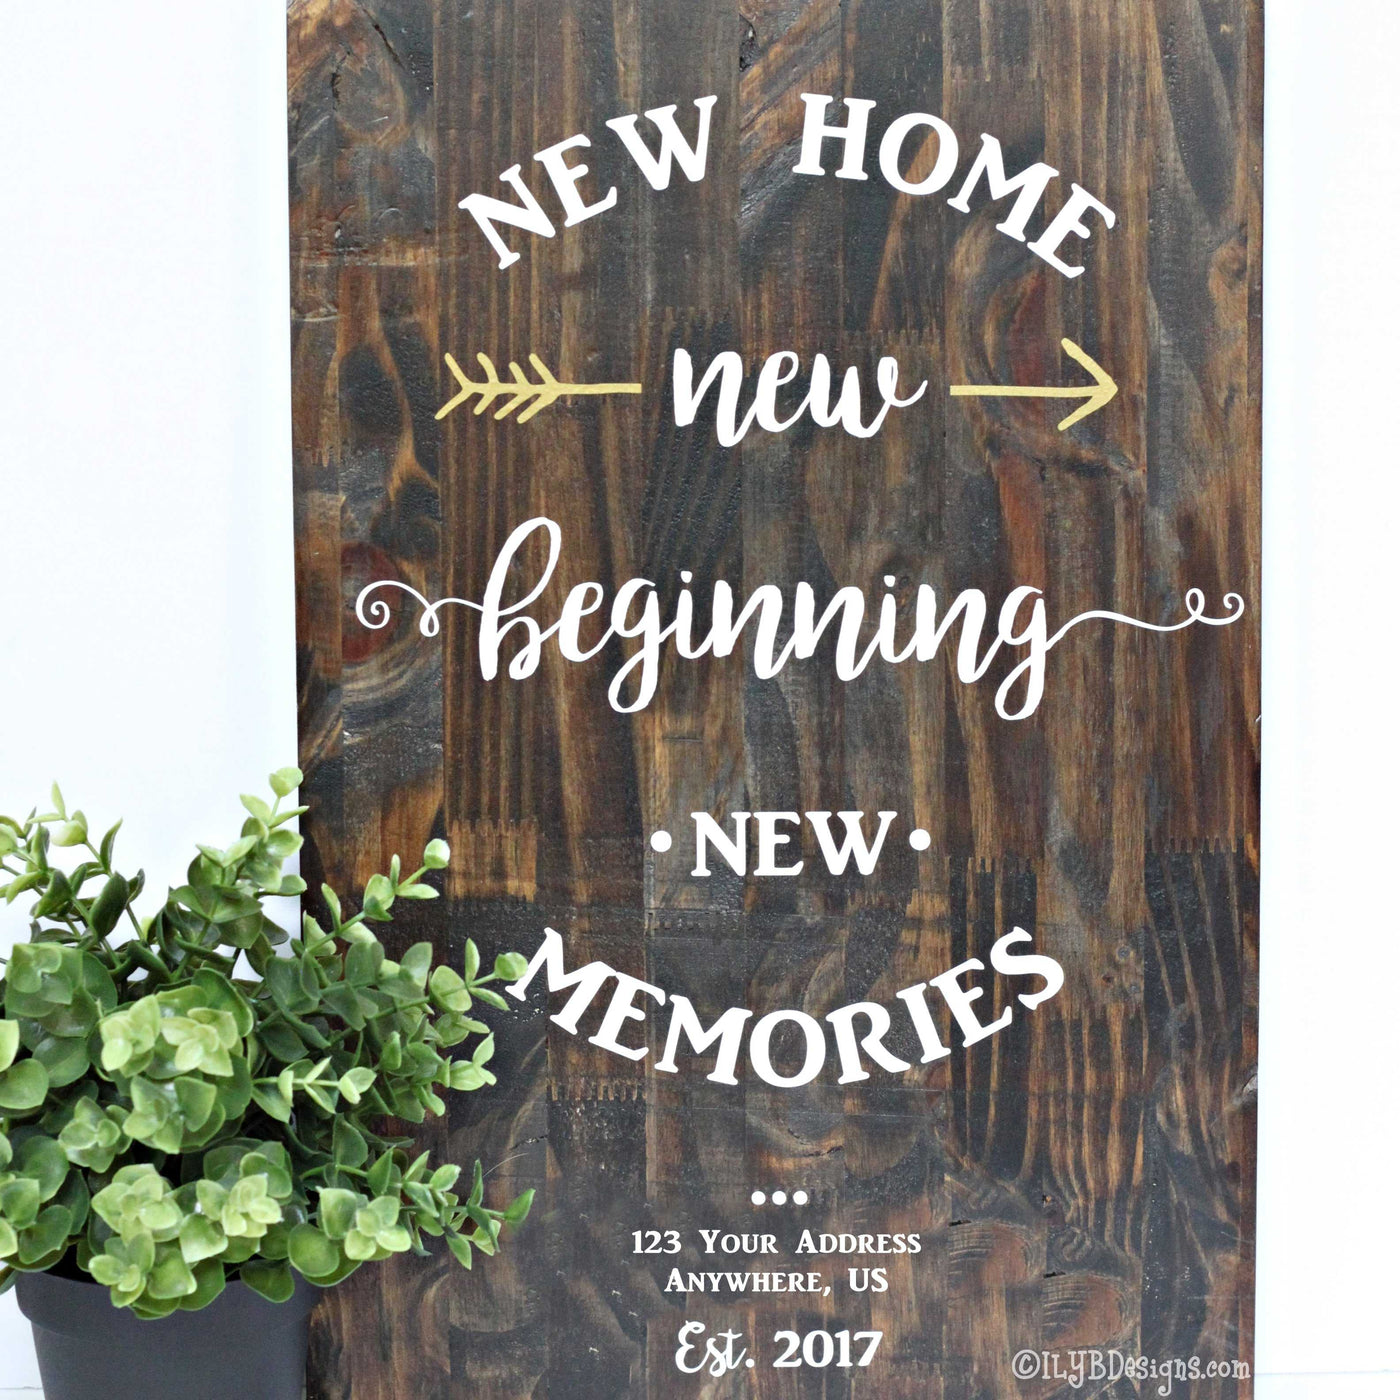 NEW HOME NEW BEGINNING Sign - ILYB Designs